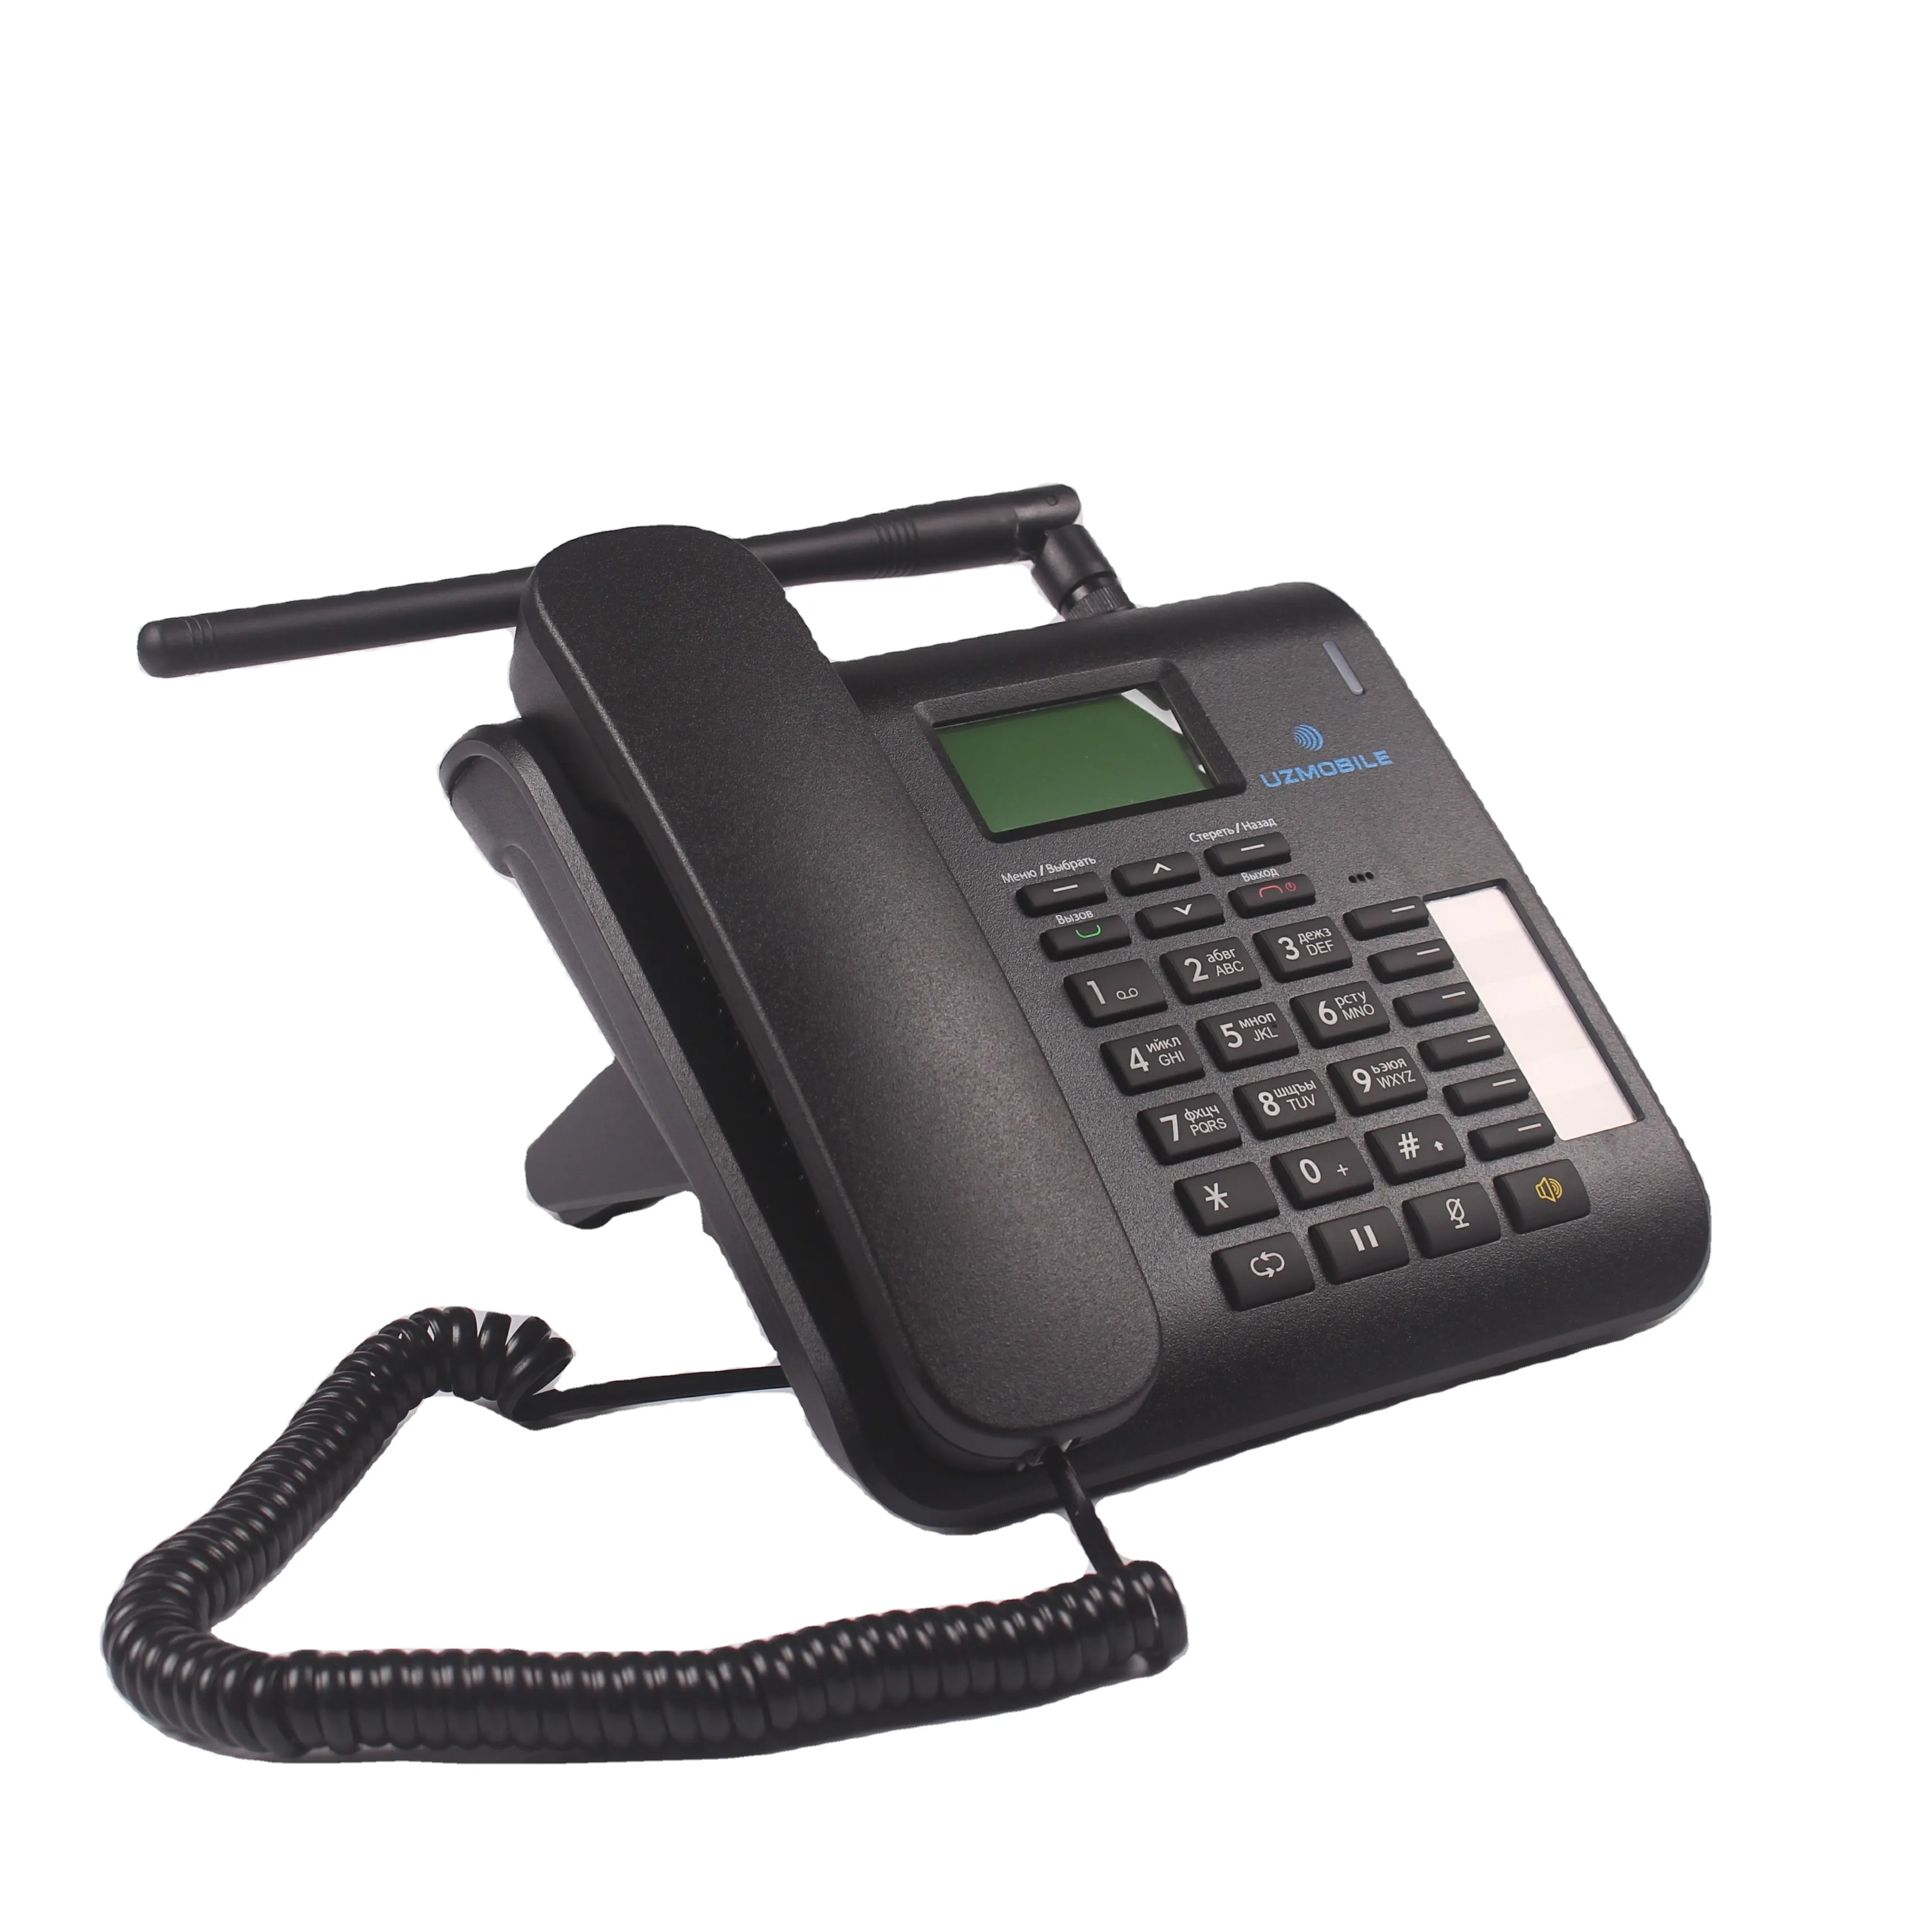 450MHZ Sim Card Desktop Drahtloses Telefon V-FC9350 Handfree Kleines Festnetz telefon